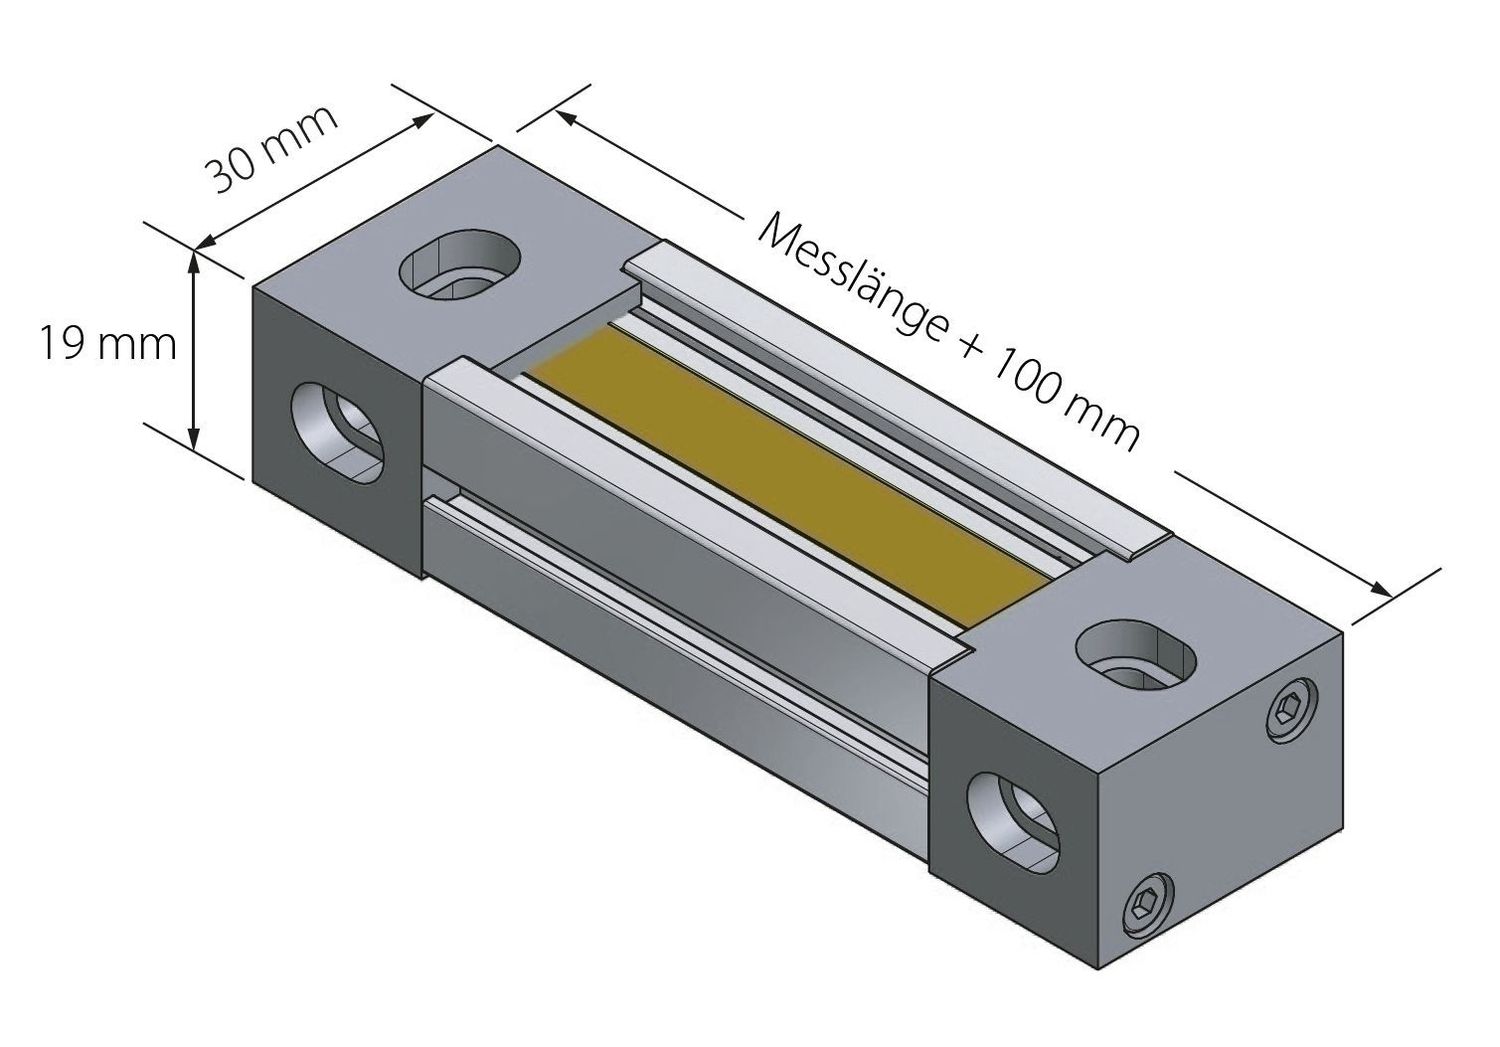 K+C Magnetmaßstab MS10A 1600 mm - 5 µm | Verfahrweg 1620 mm